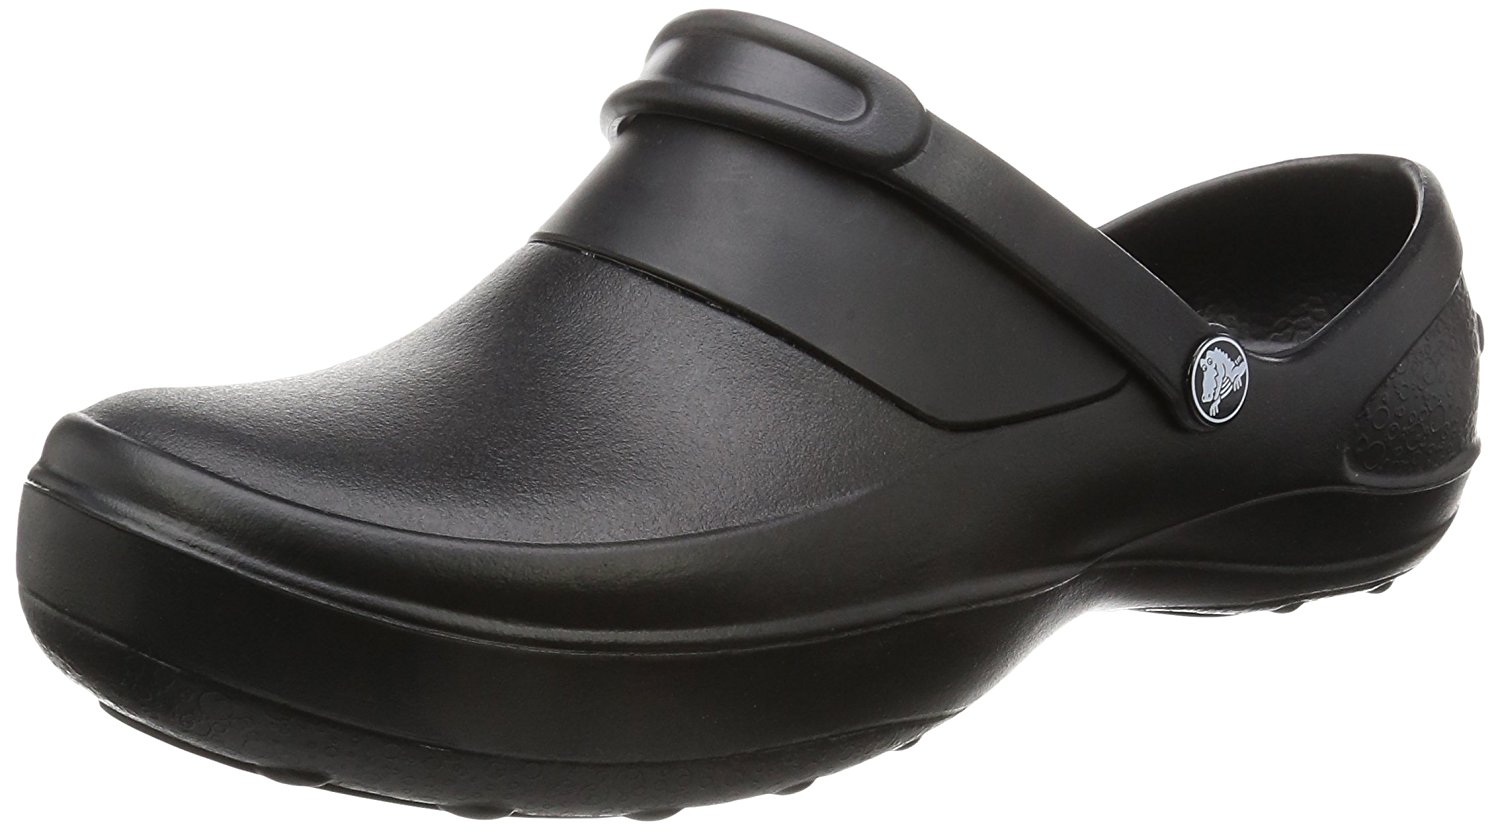 Crocs Womens Mercy Closed Toe SlingBack Clogs, Black/Black, Size 9.0 ...